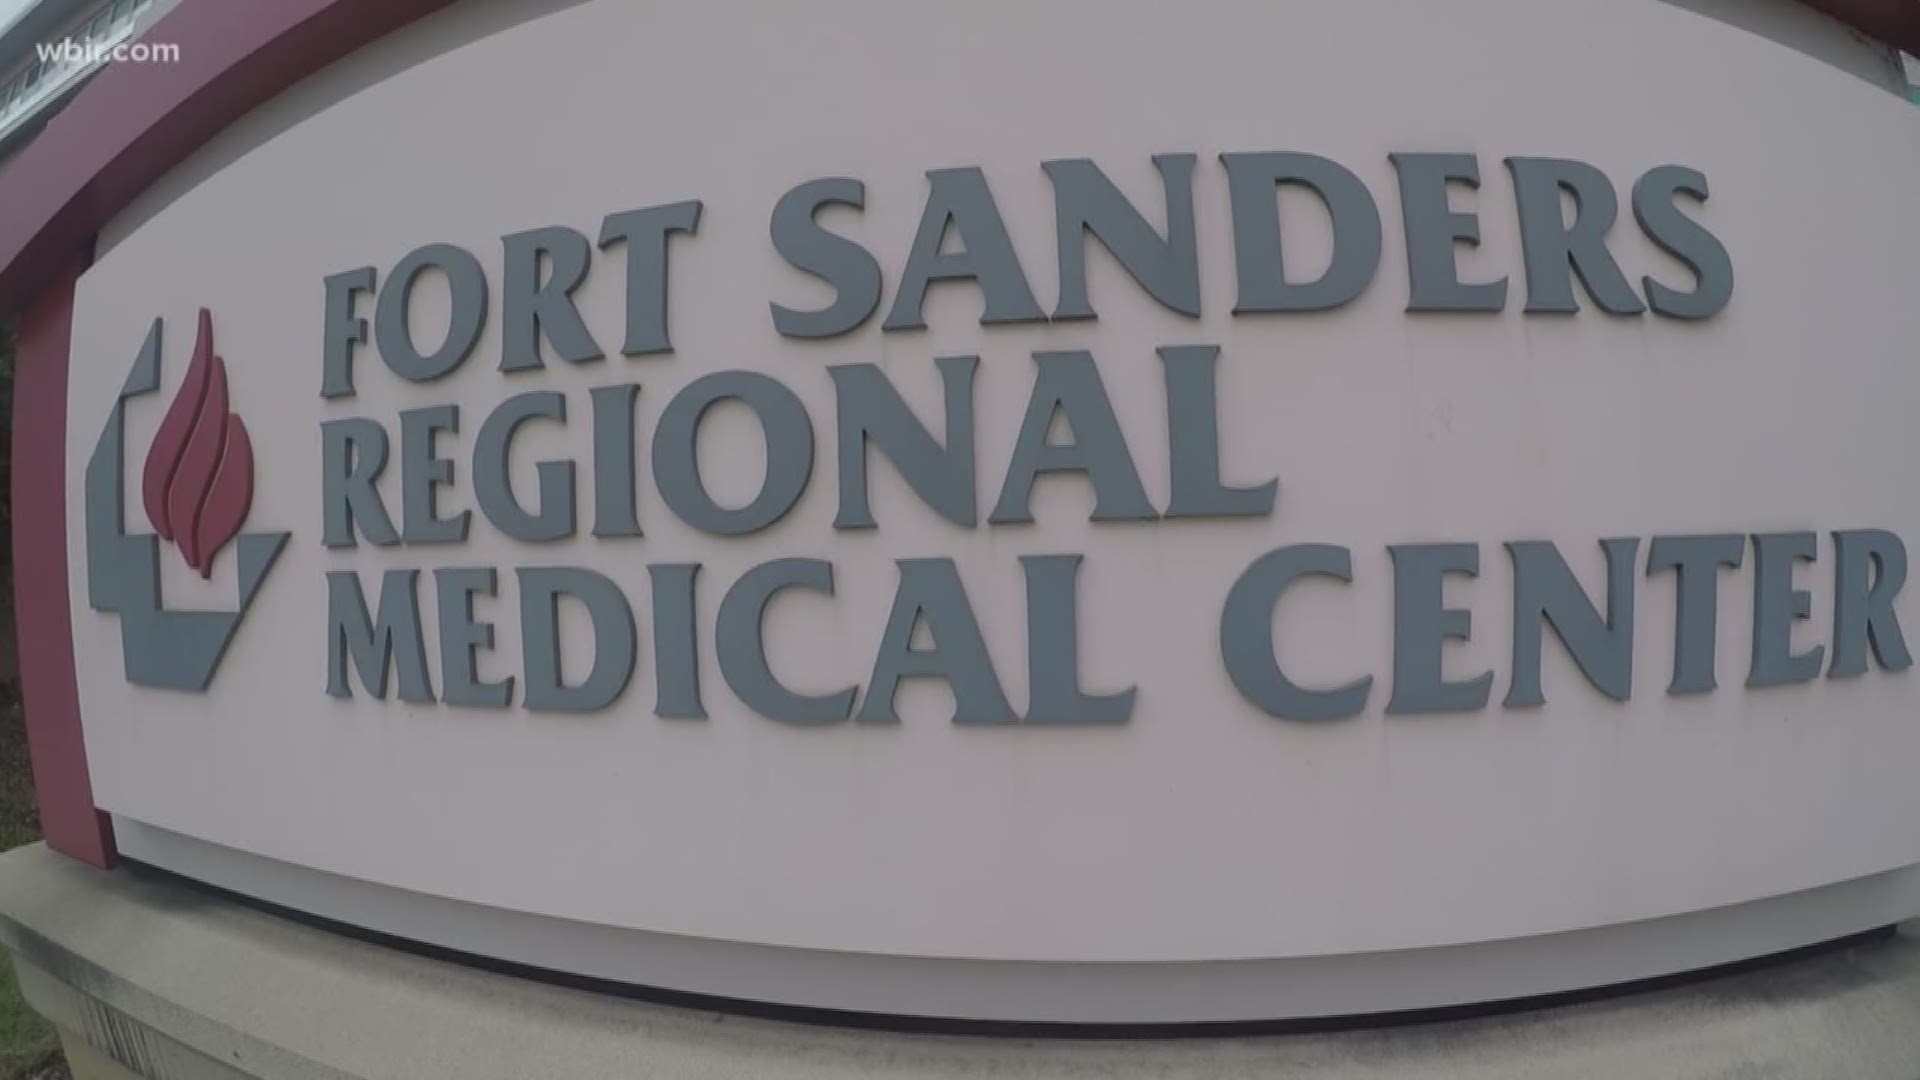 April 9, 2018: Covenant Health is announcing plans for a $115 million expansion and modernization of Fort Sanders Regional Medical Center.